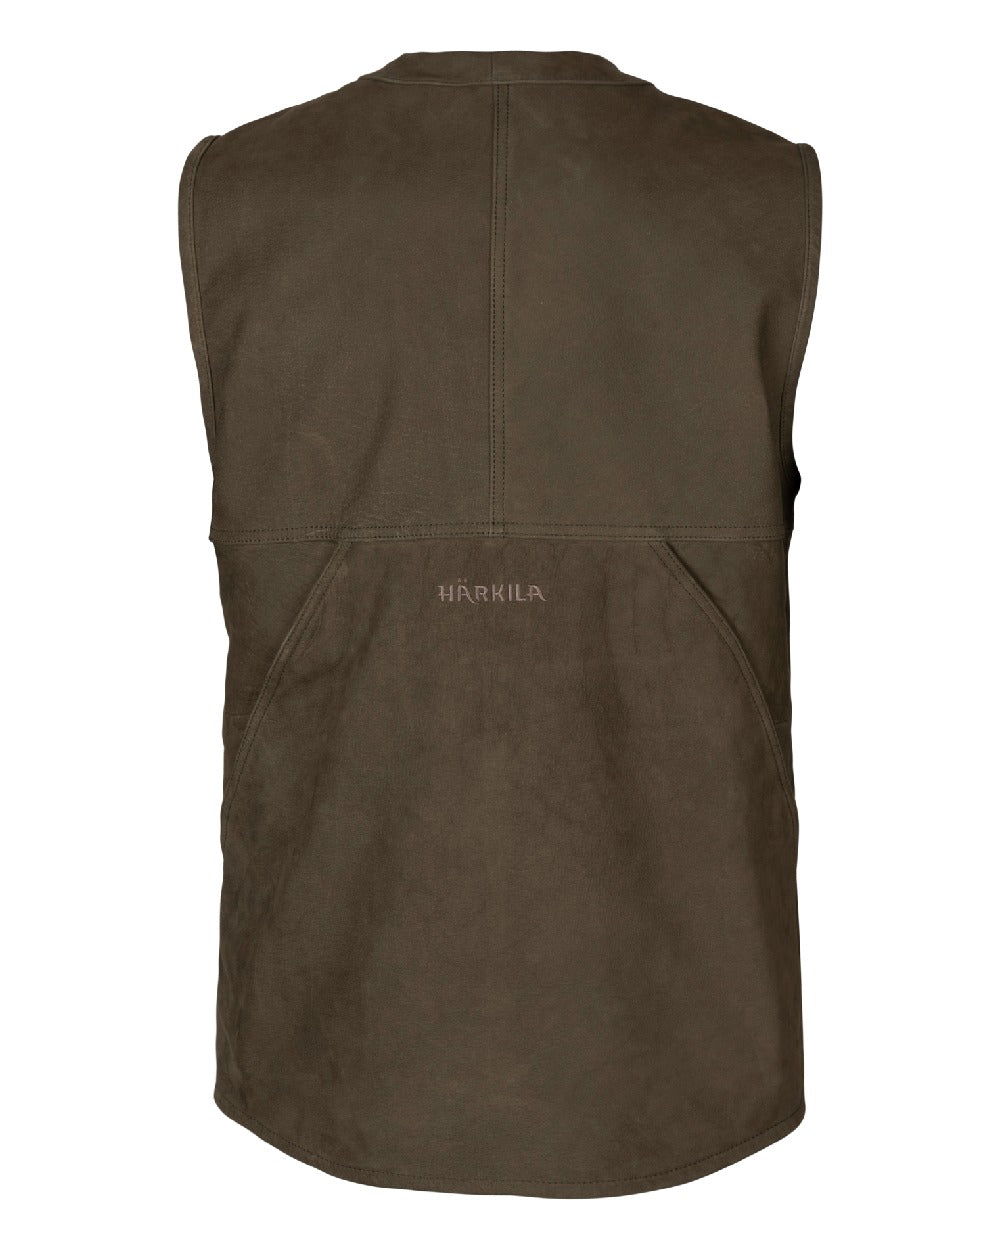 Harkila Pro Hunter Leather Waistcoat in Willow Green